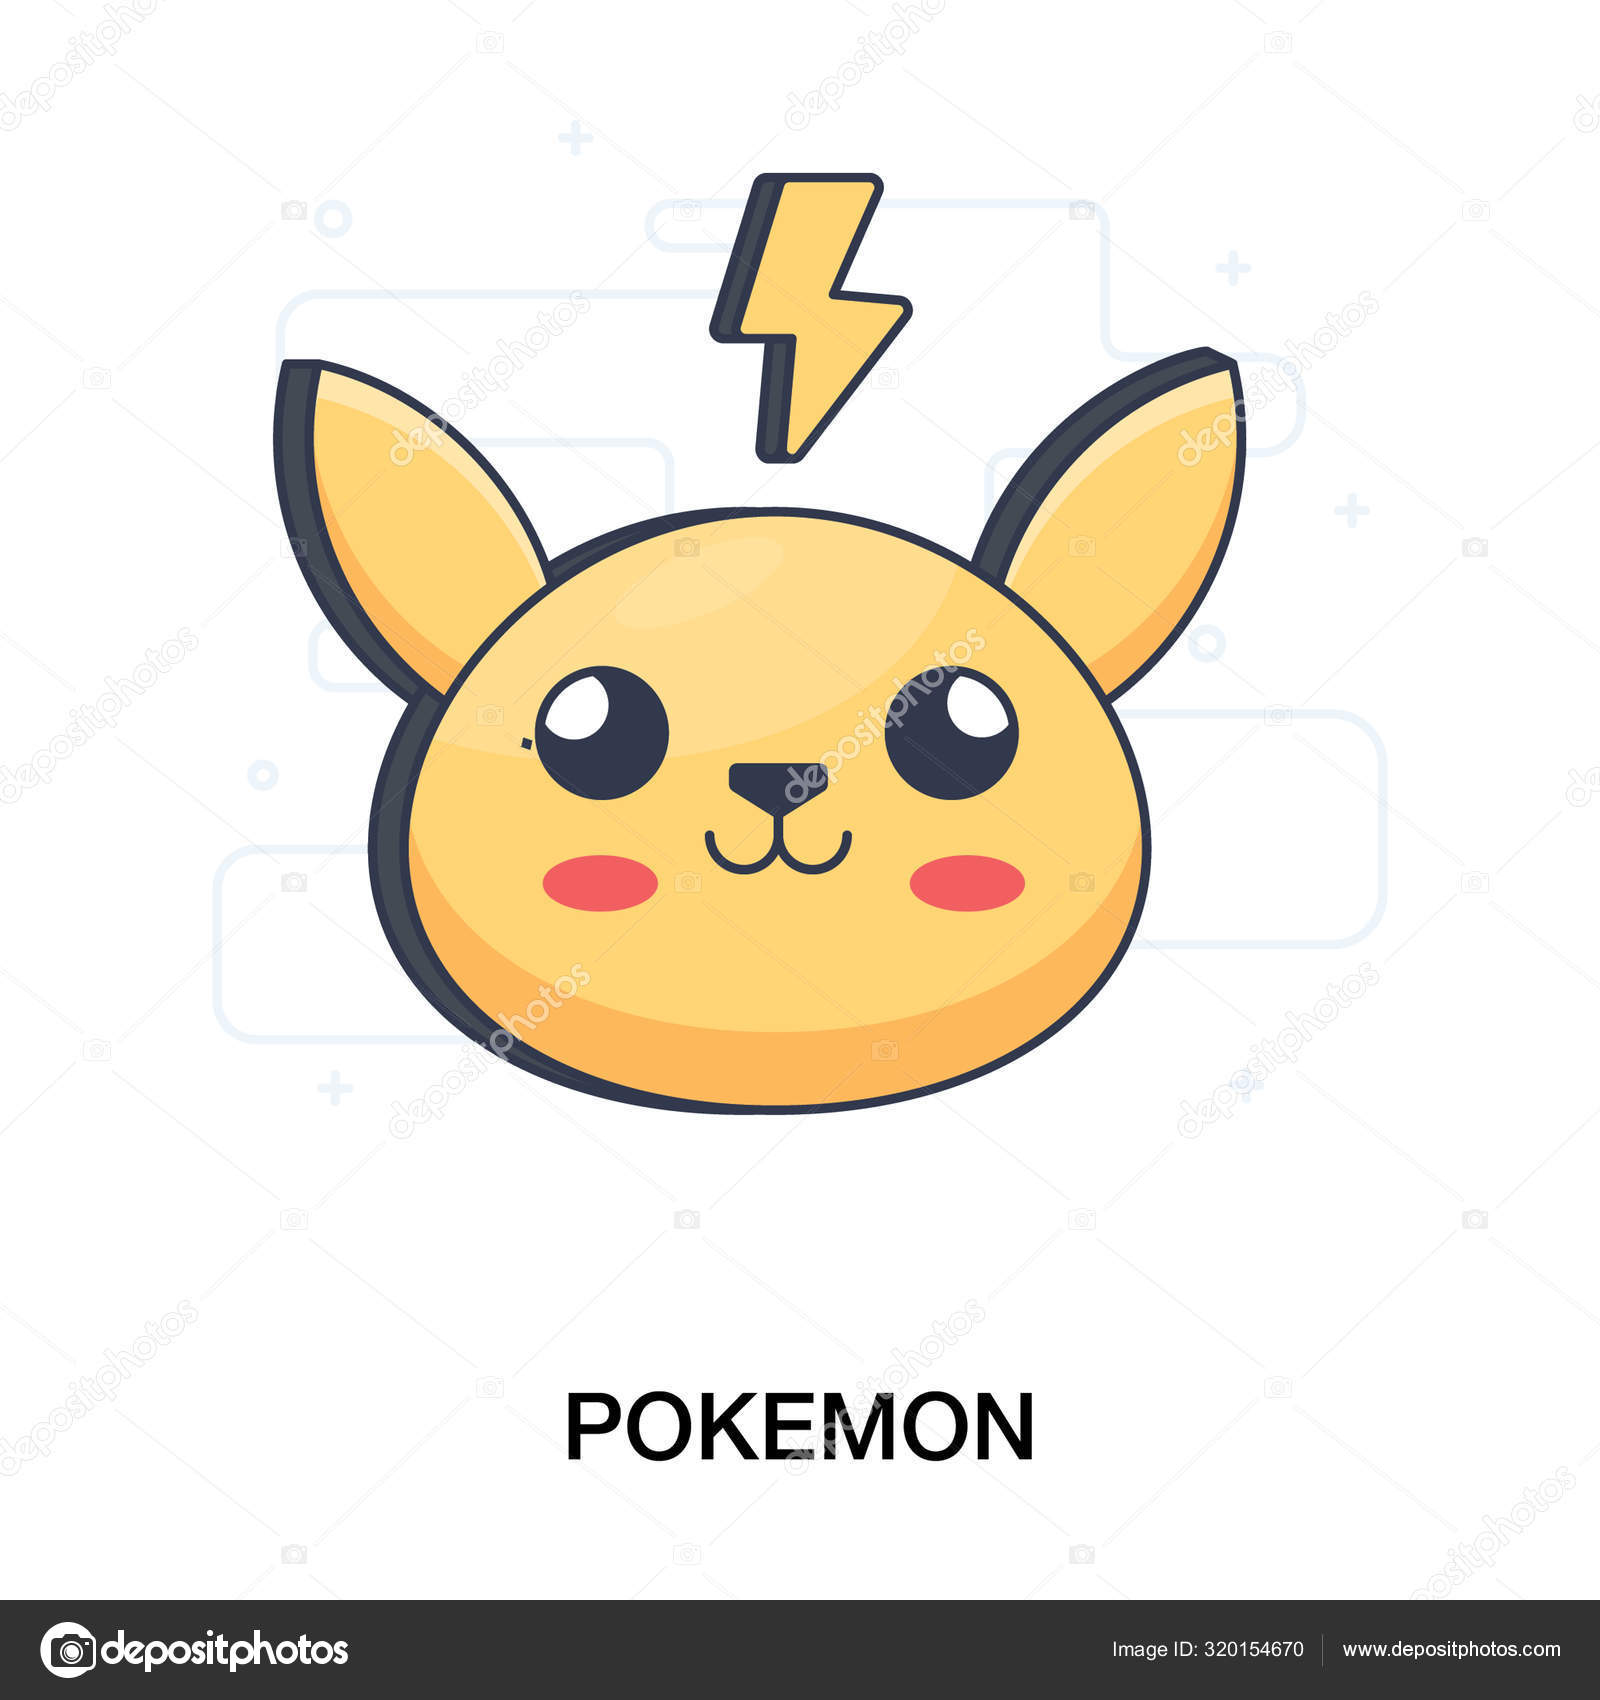 Pokemon pikachu Vector Art Stock Images | Depositphotos